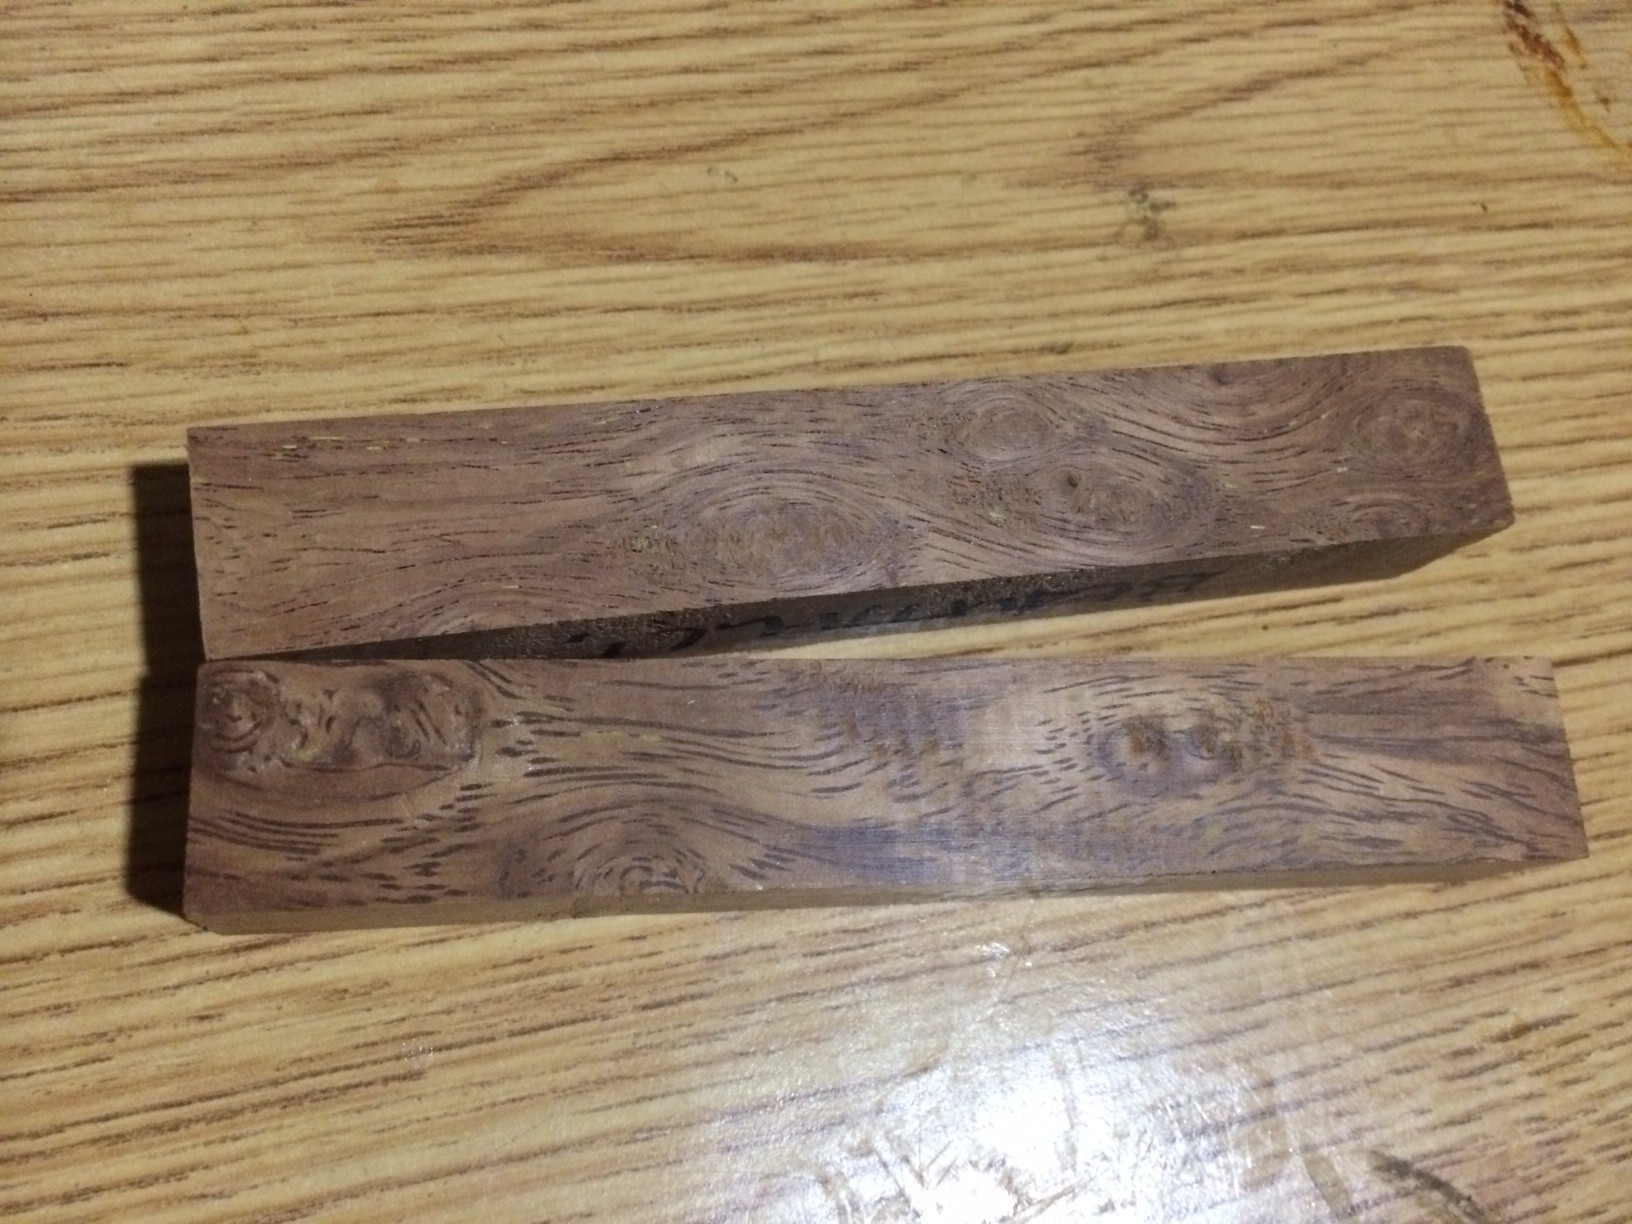 mystery wood.  please help identify!